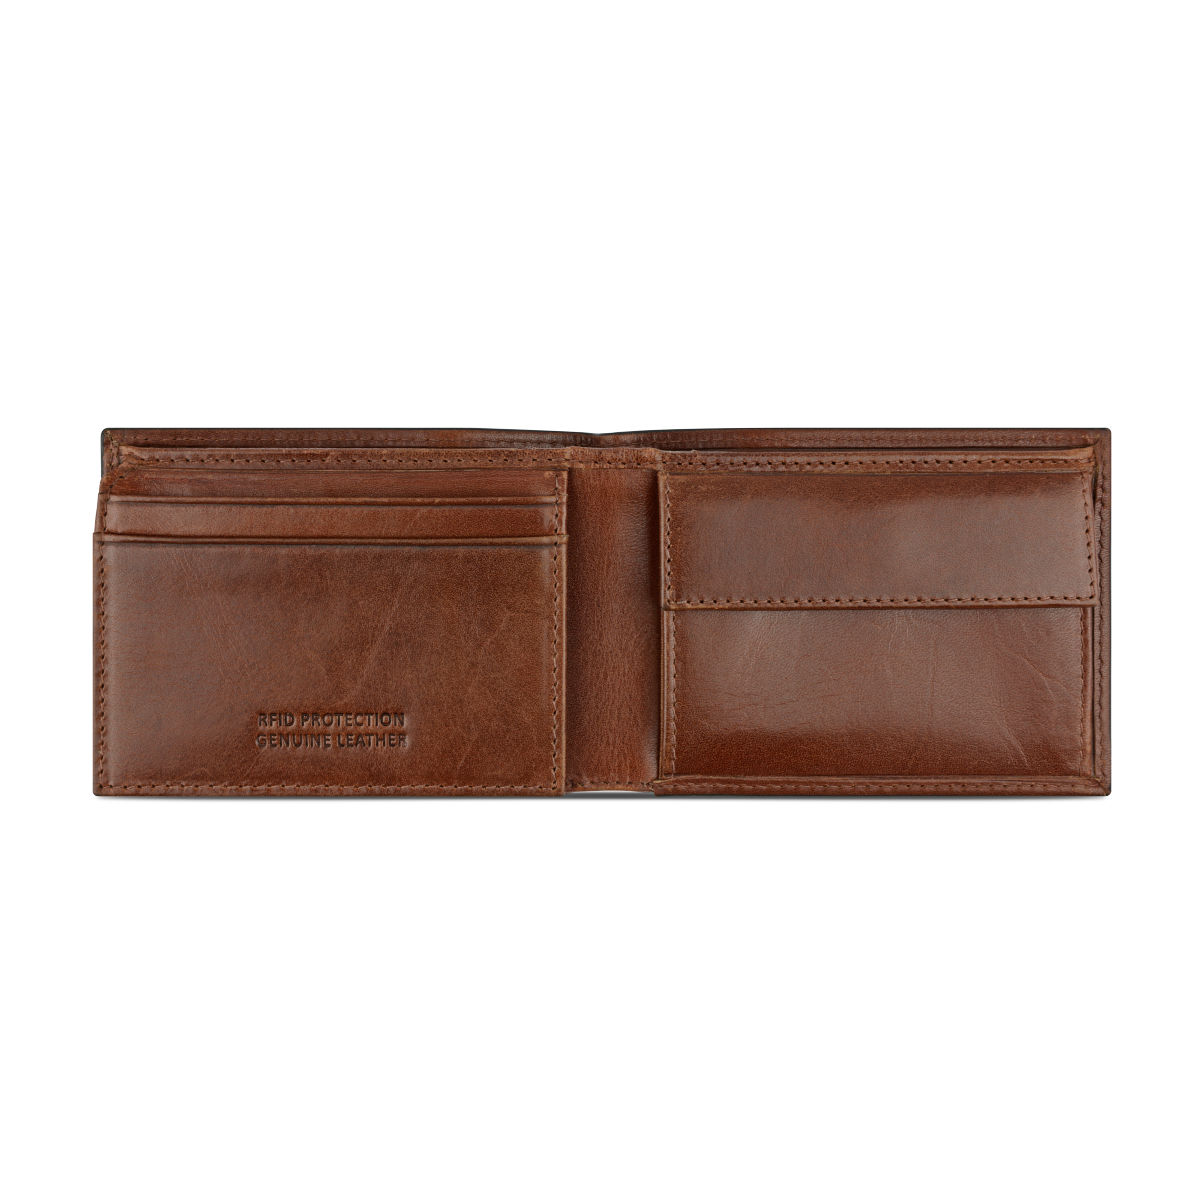 - Bugatti leather brown cognac men\'s wallet